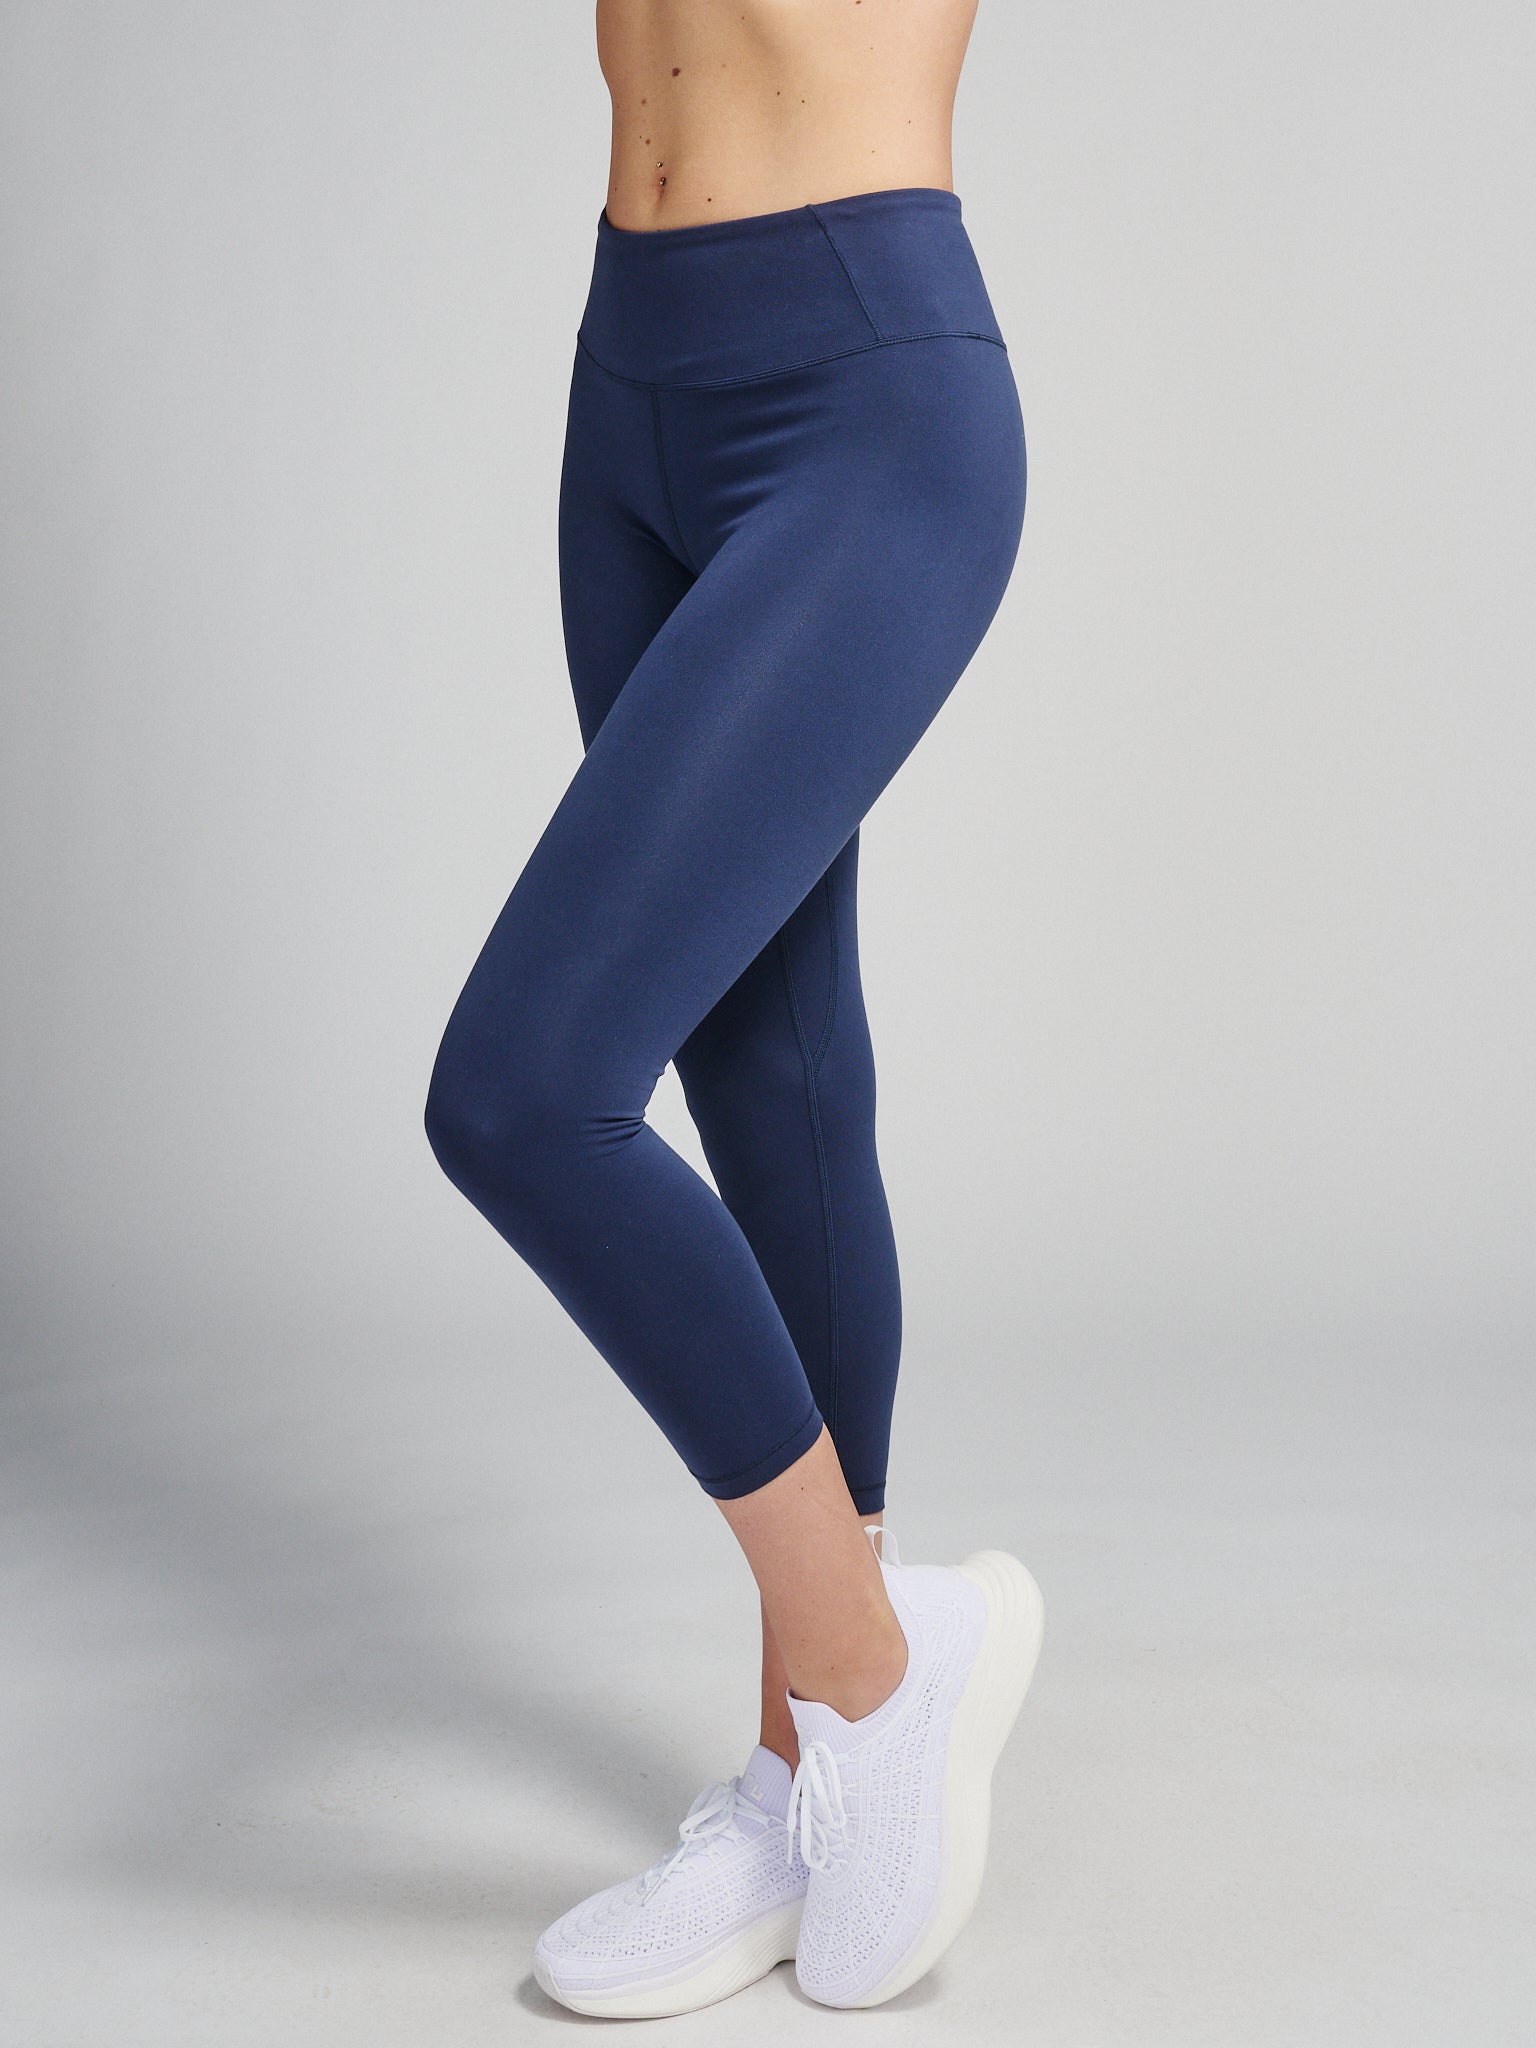 Lululemon Stretch High-Rise Pant 7/8 Length Blue Size 2 - $26 (70